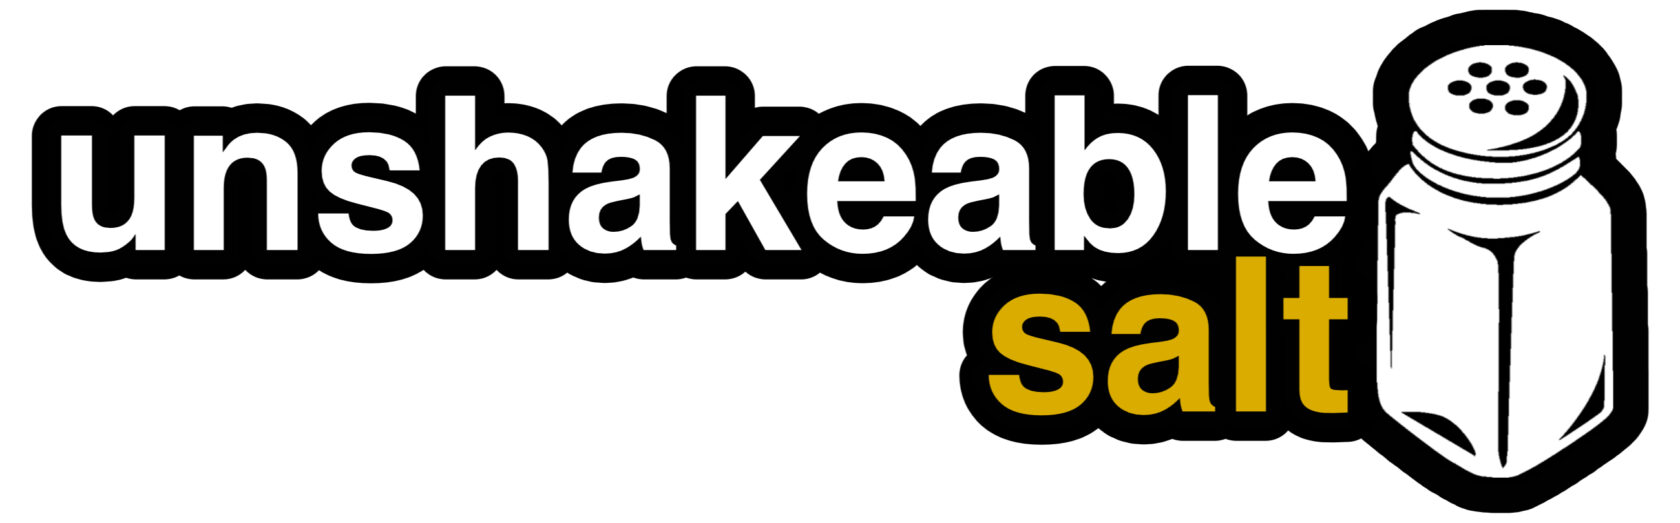 Unshakeable Salt Logo